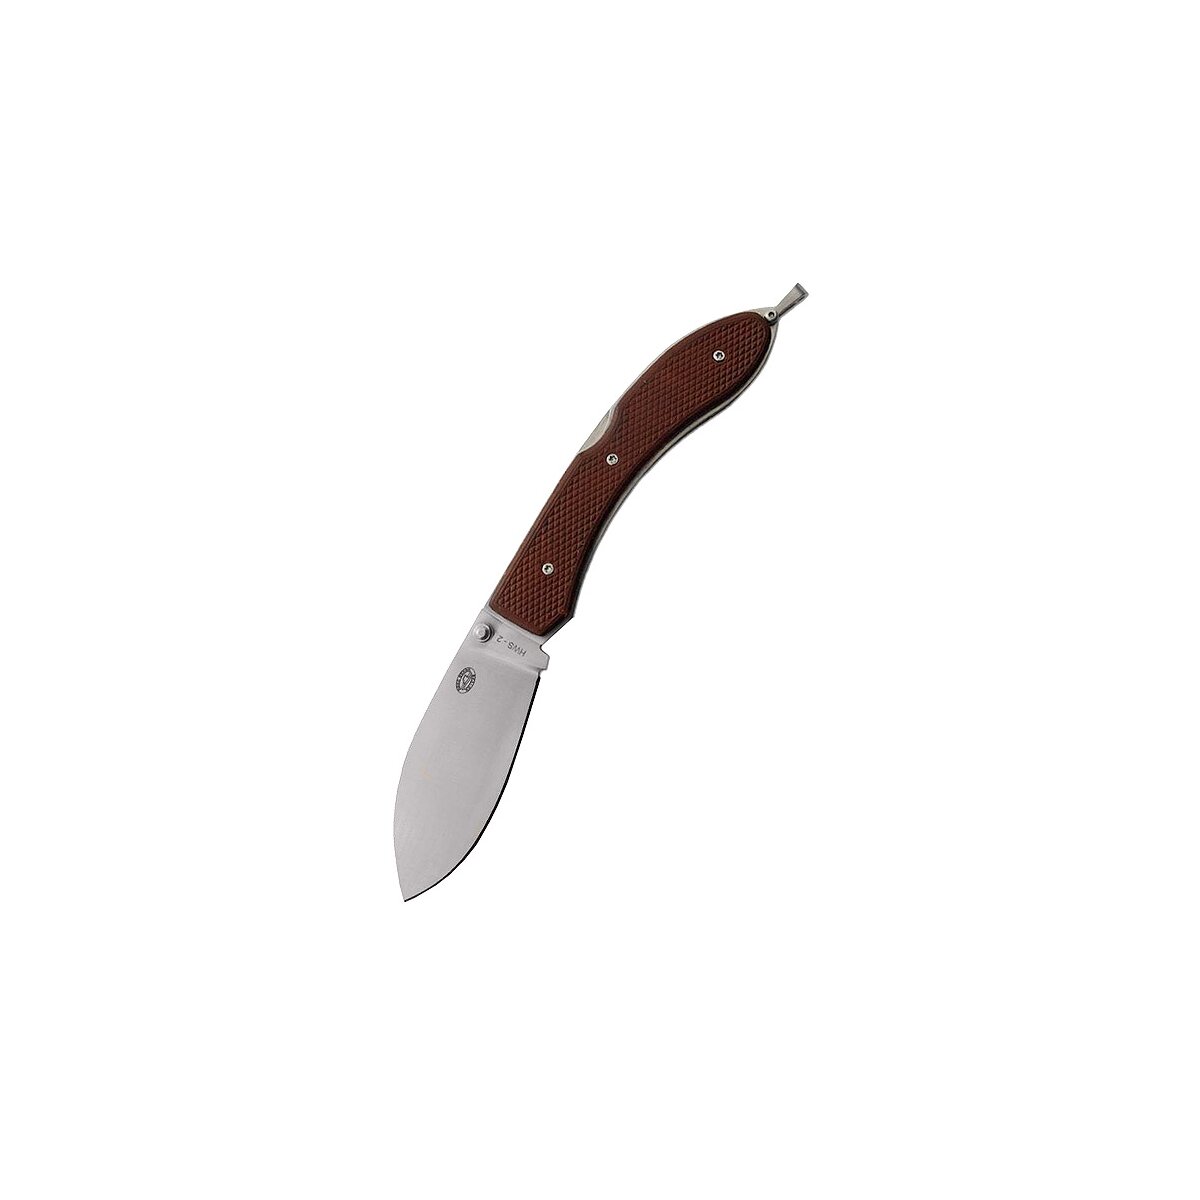 Tortugas Lockback Folding Knife with Spear Point Blade